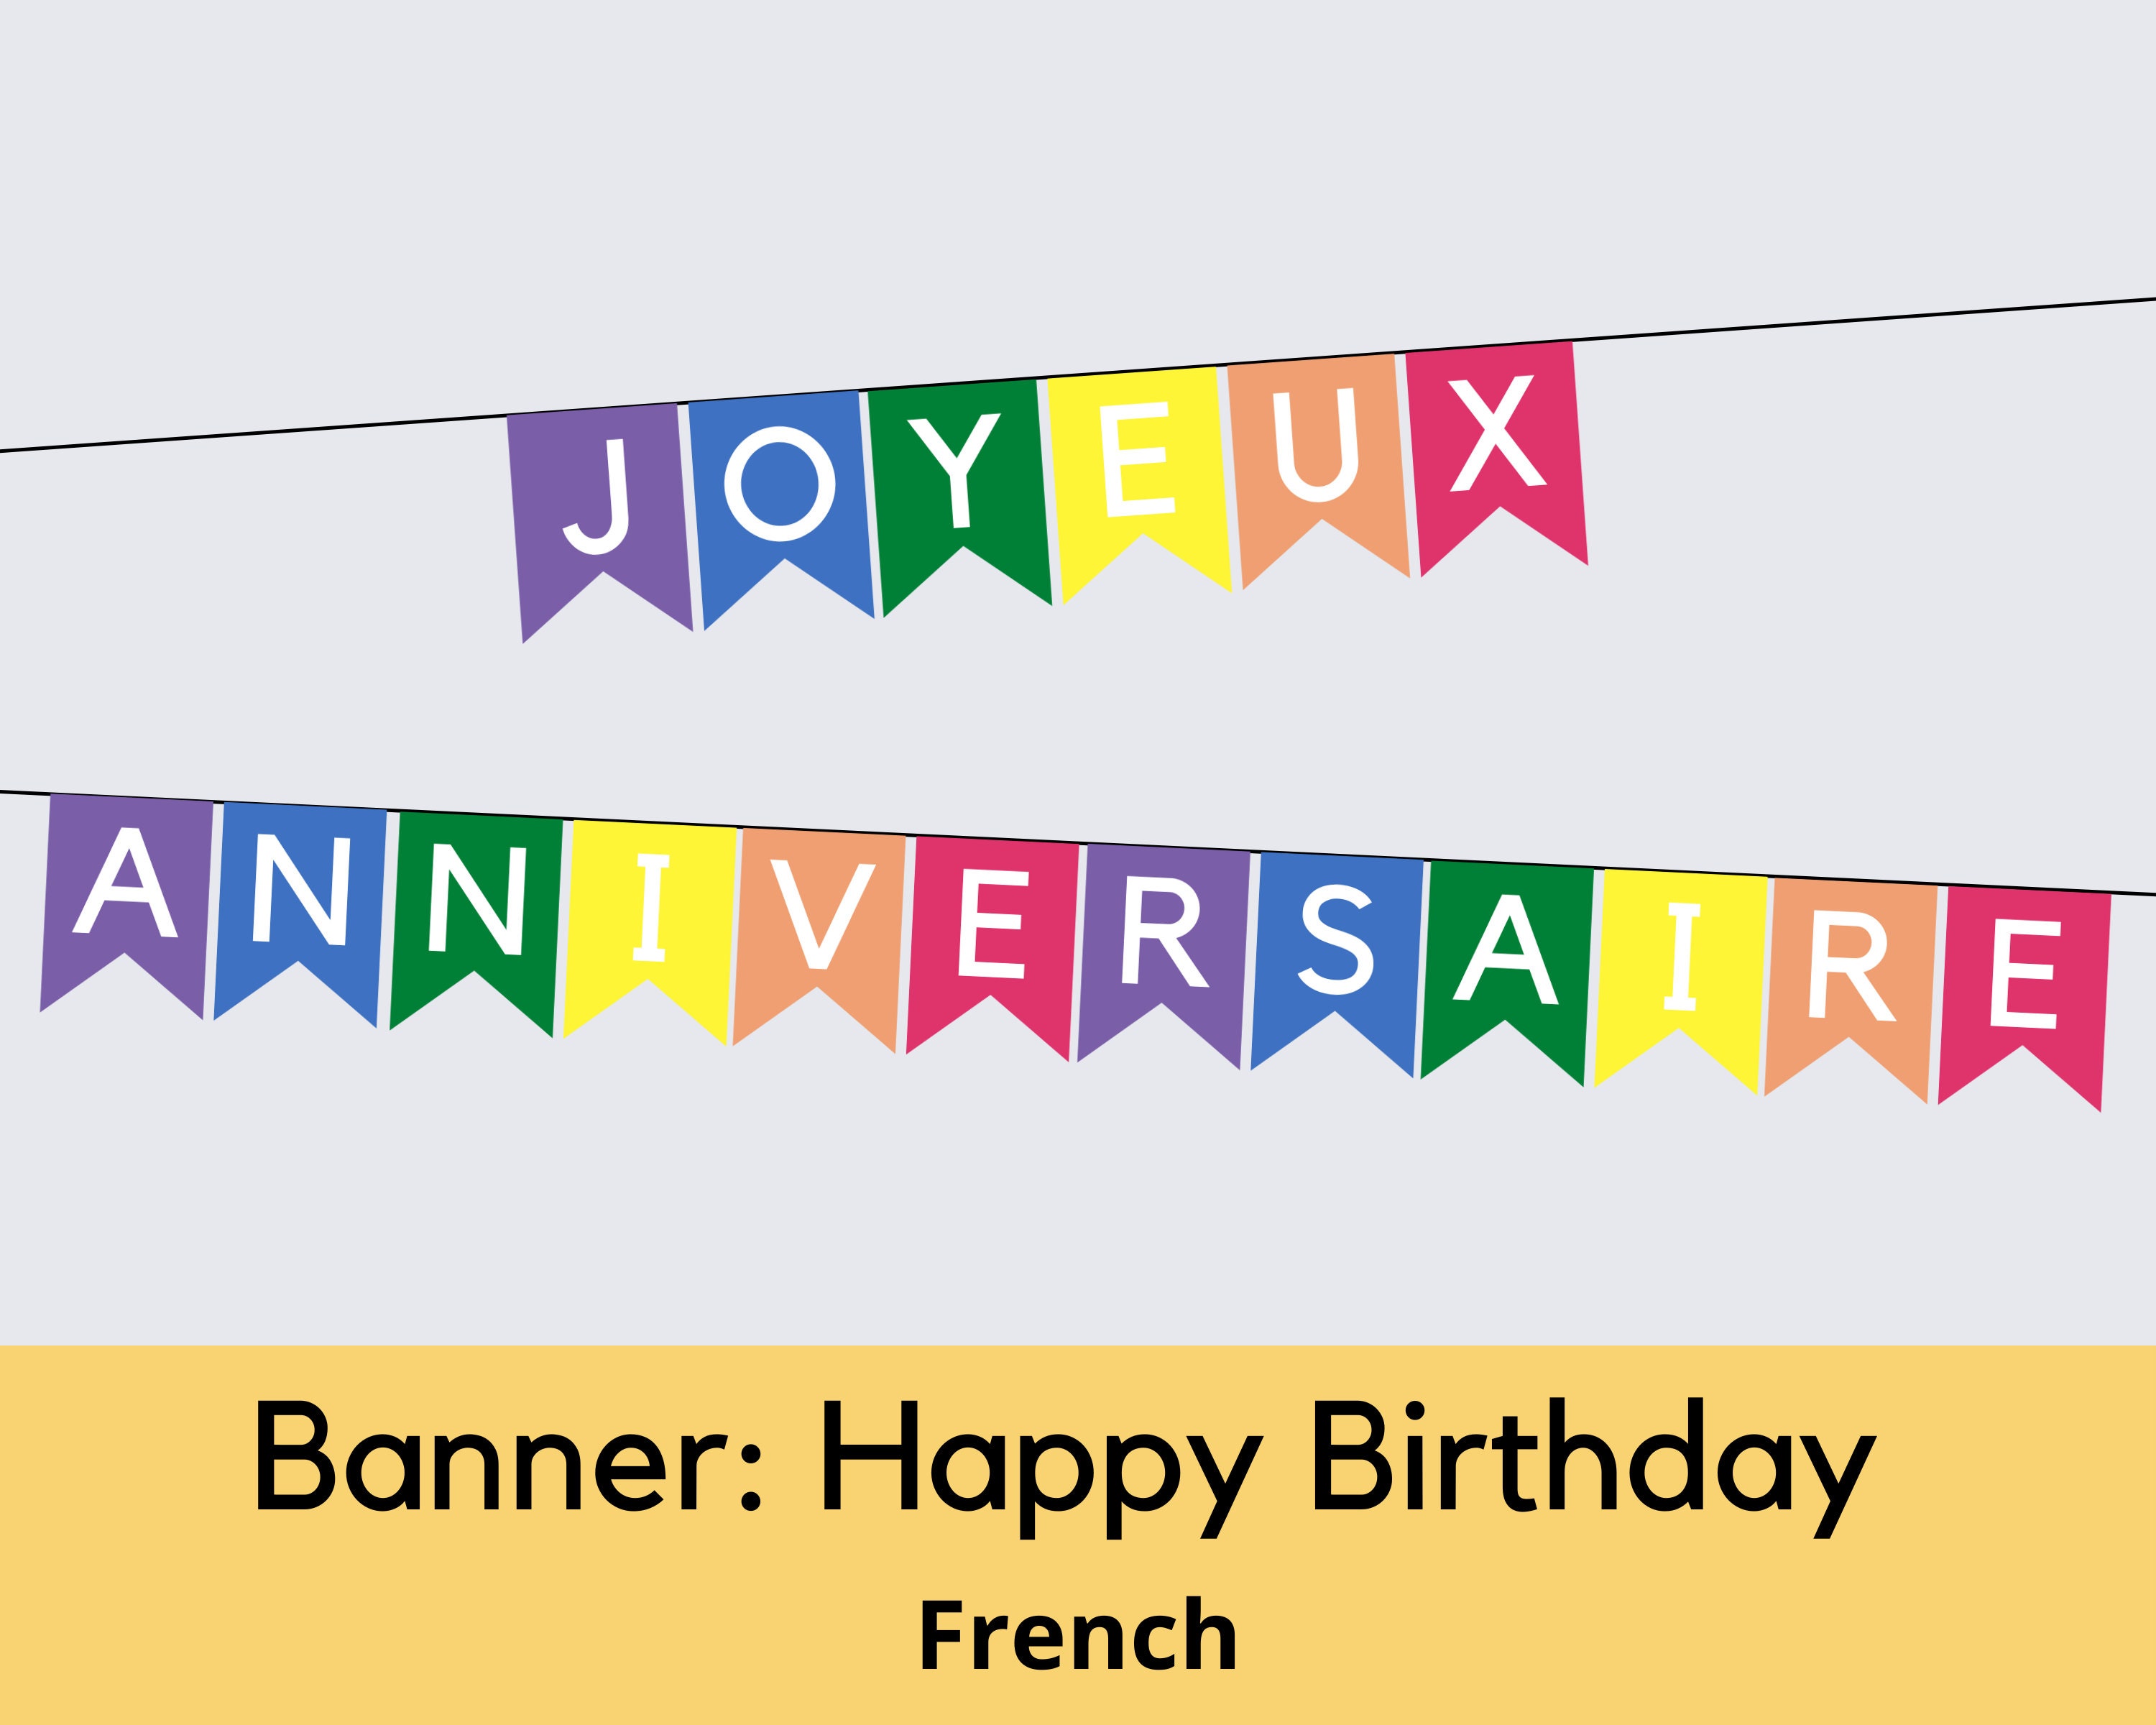 Joyeux anniversaire - Lawless French Expression - Happy Birthday